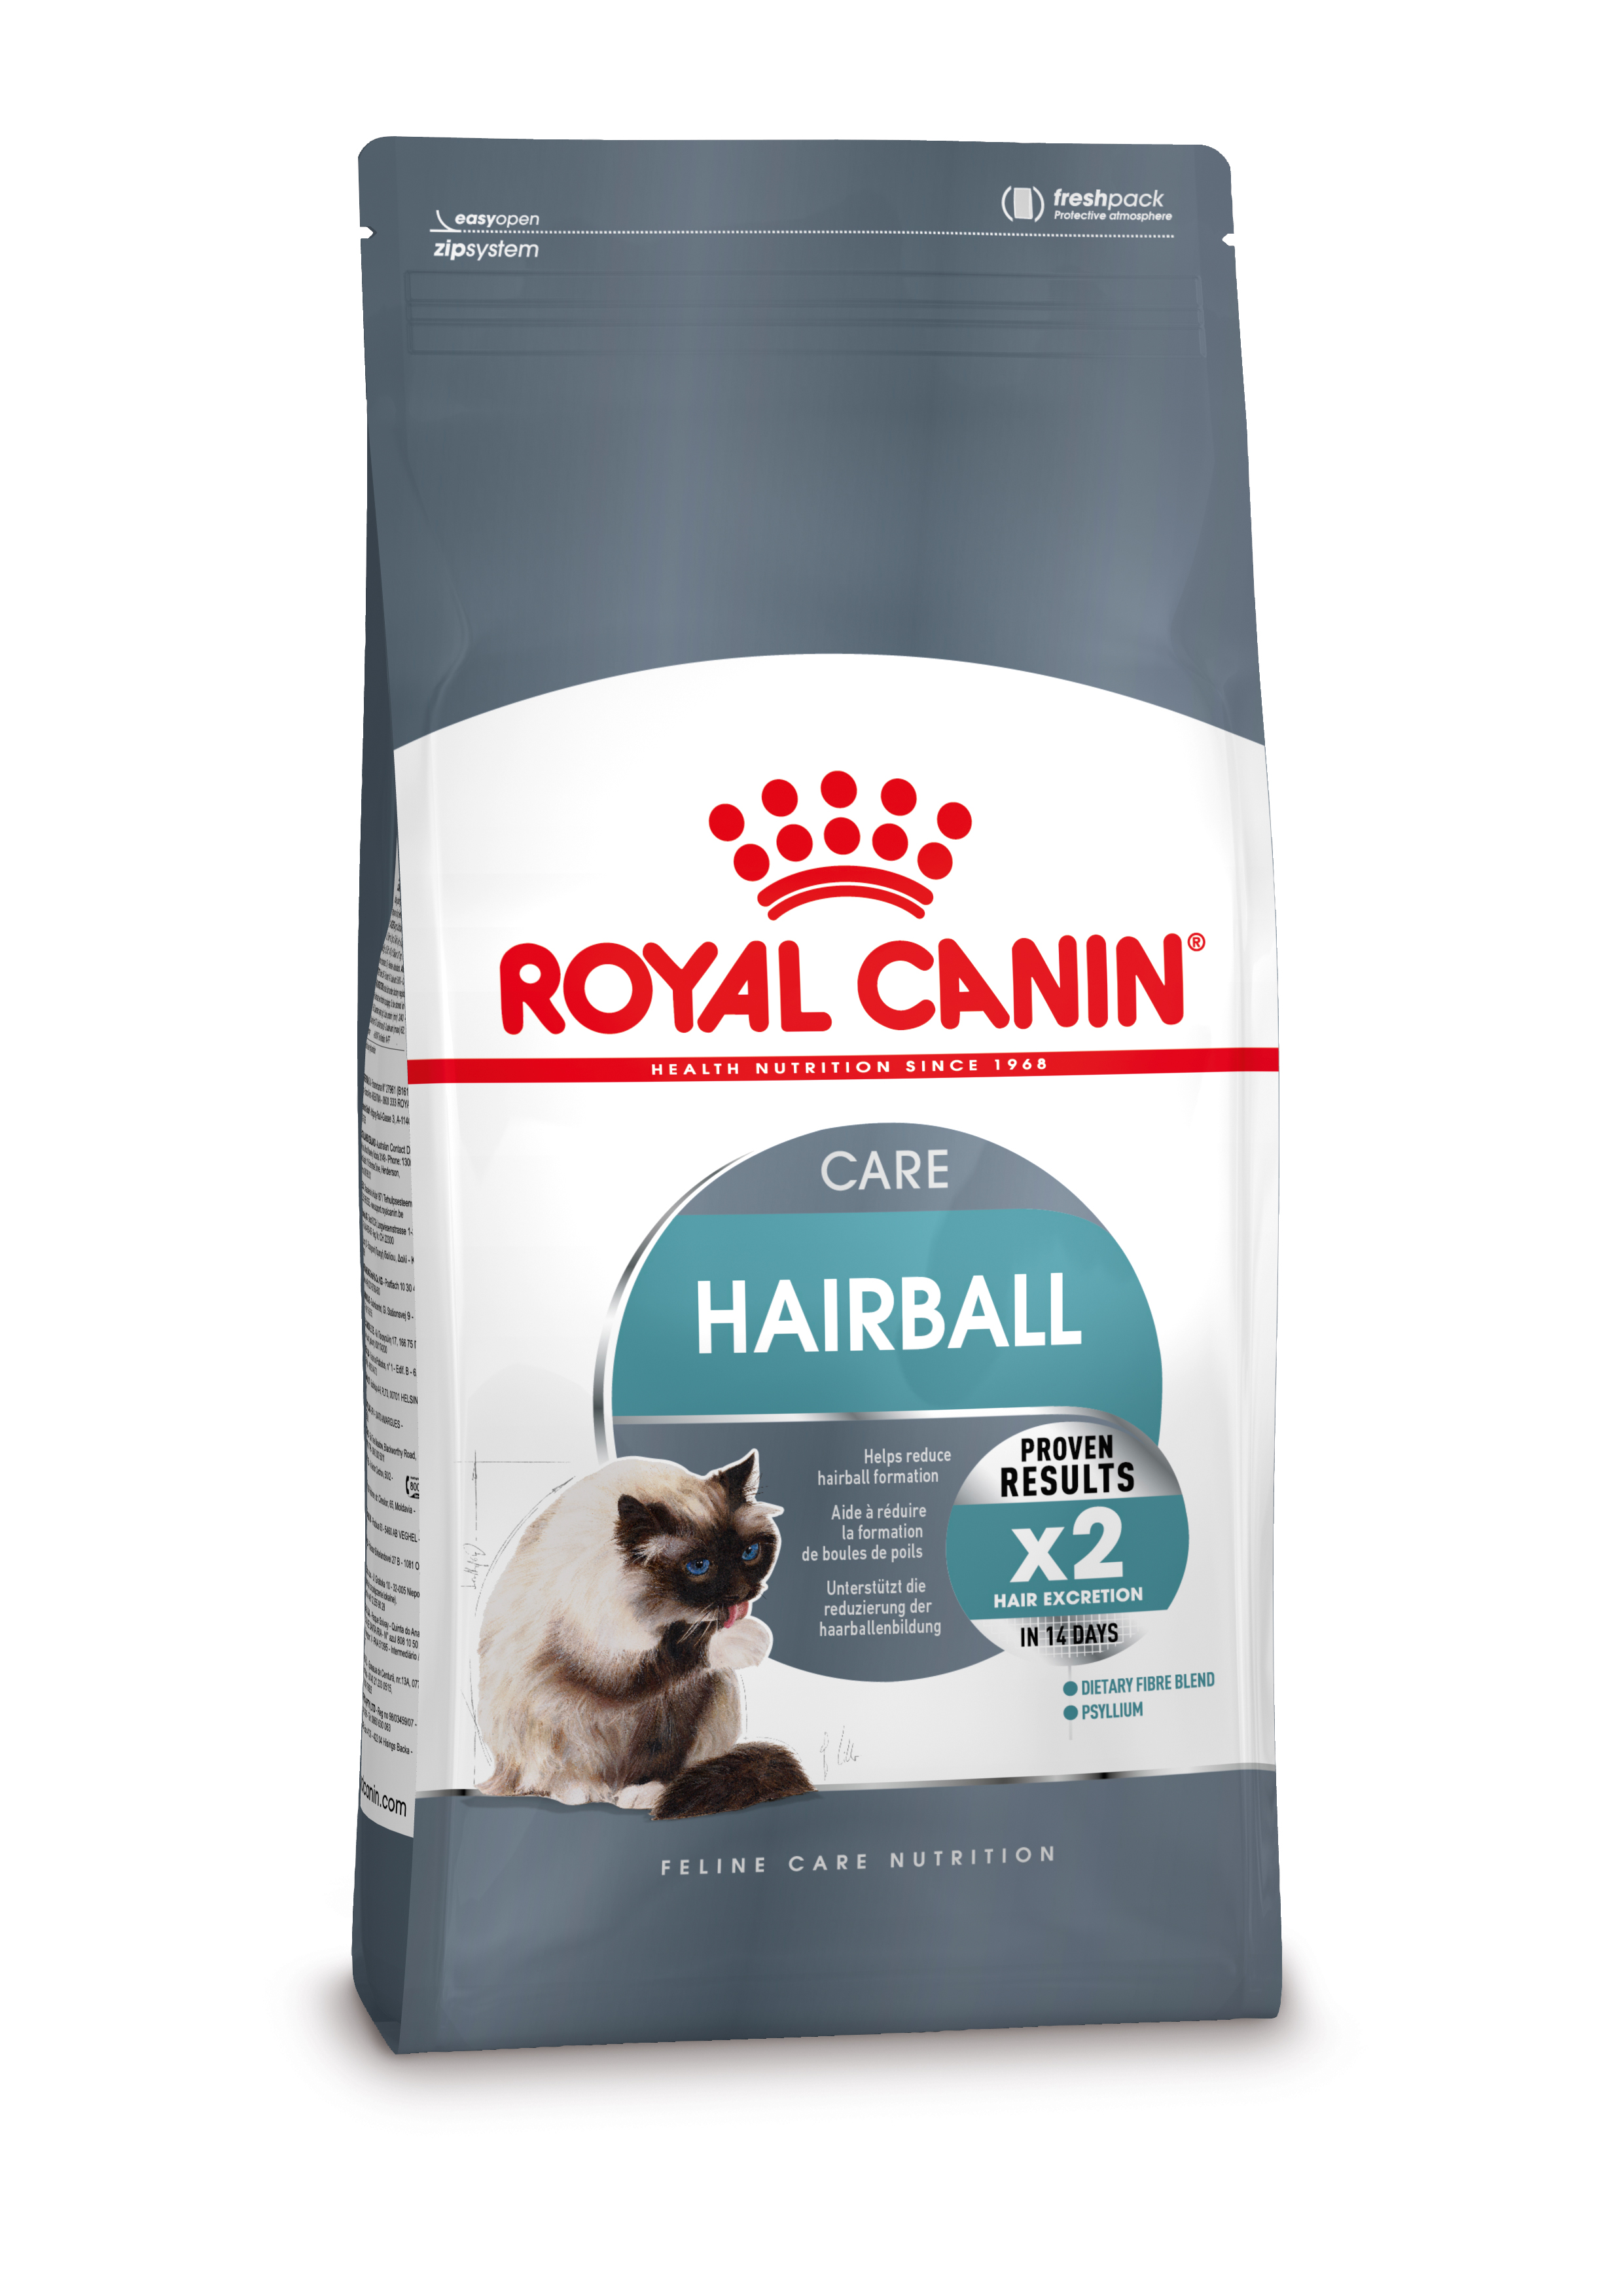 Afbeelding Royal Canin Hairball Care kattenvoer 10 kg door Brekz.nl